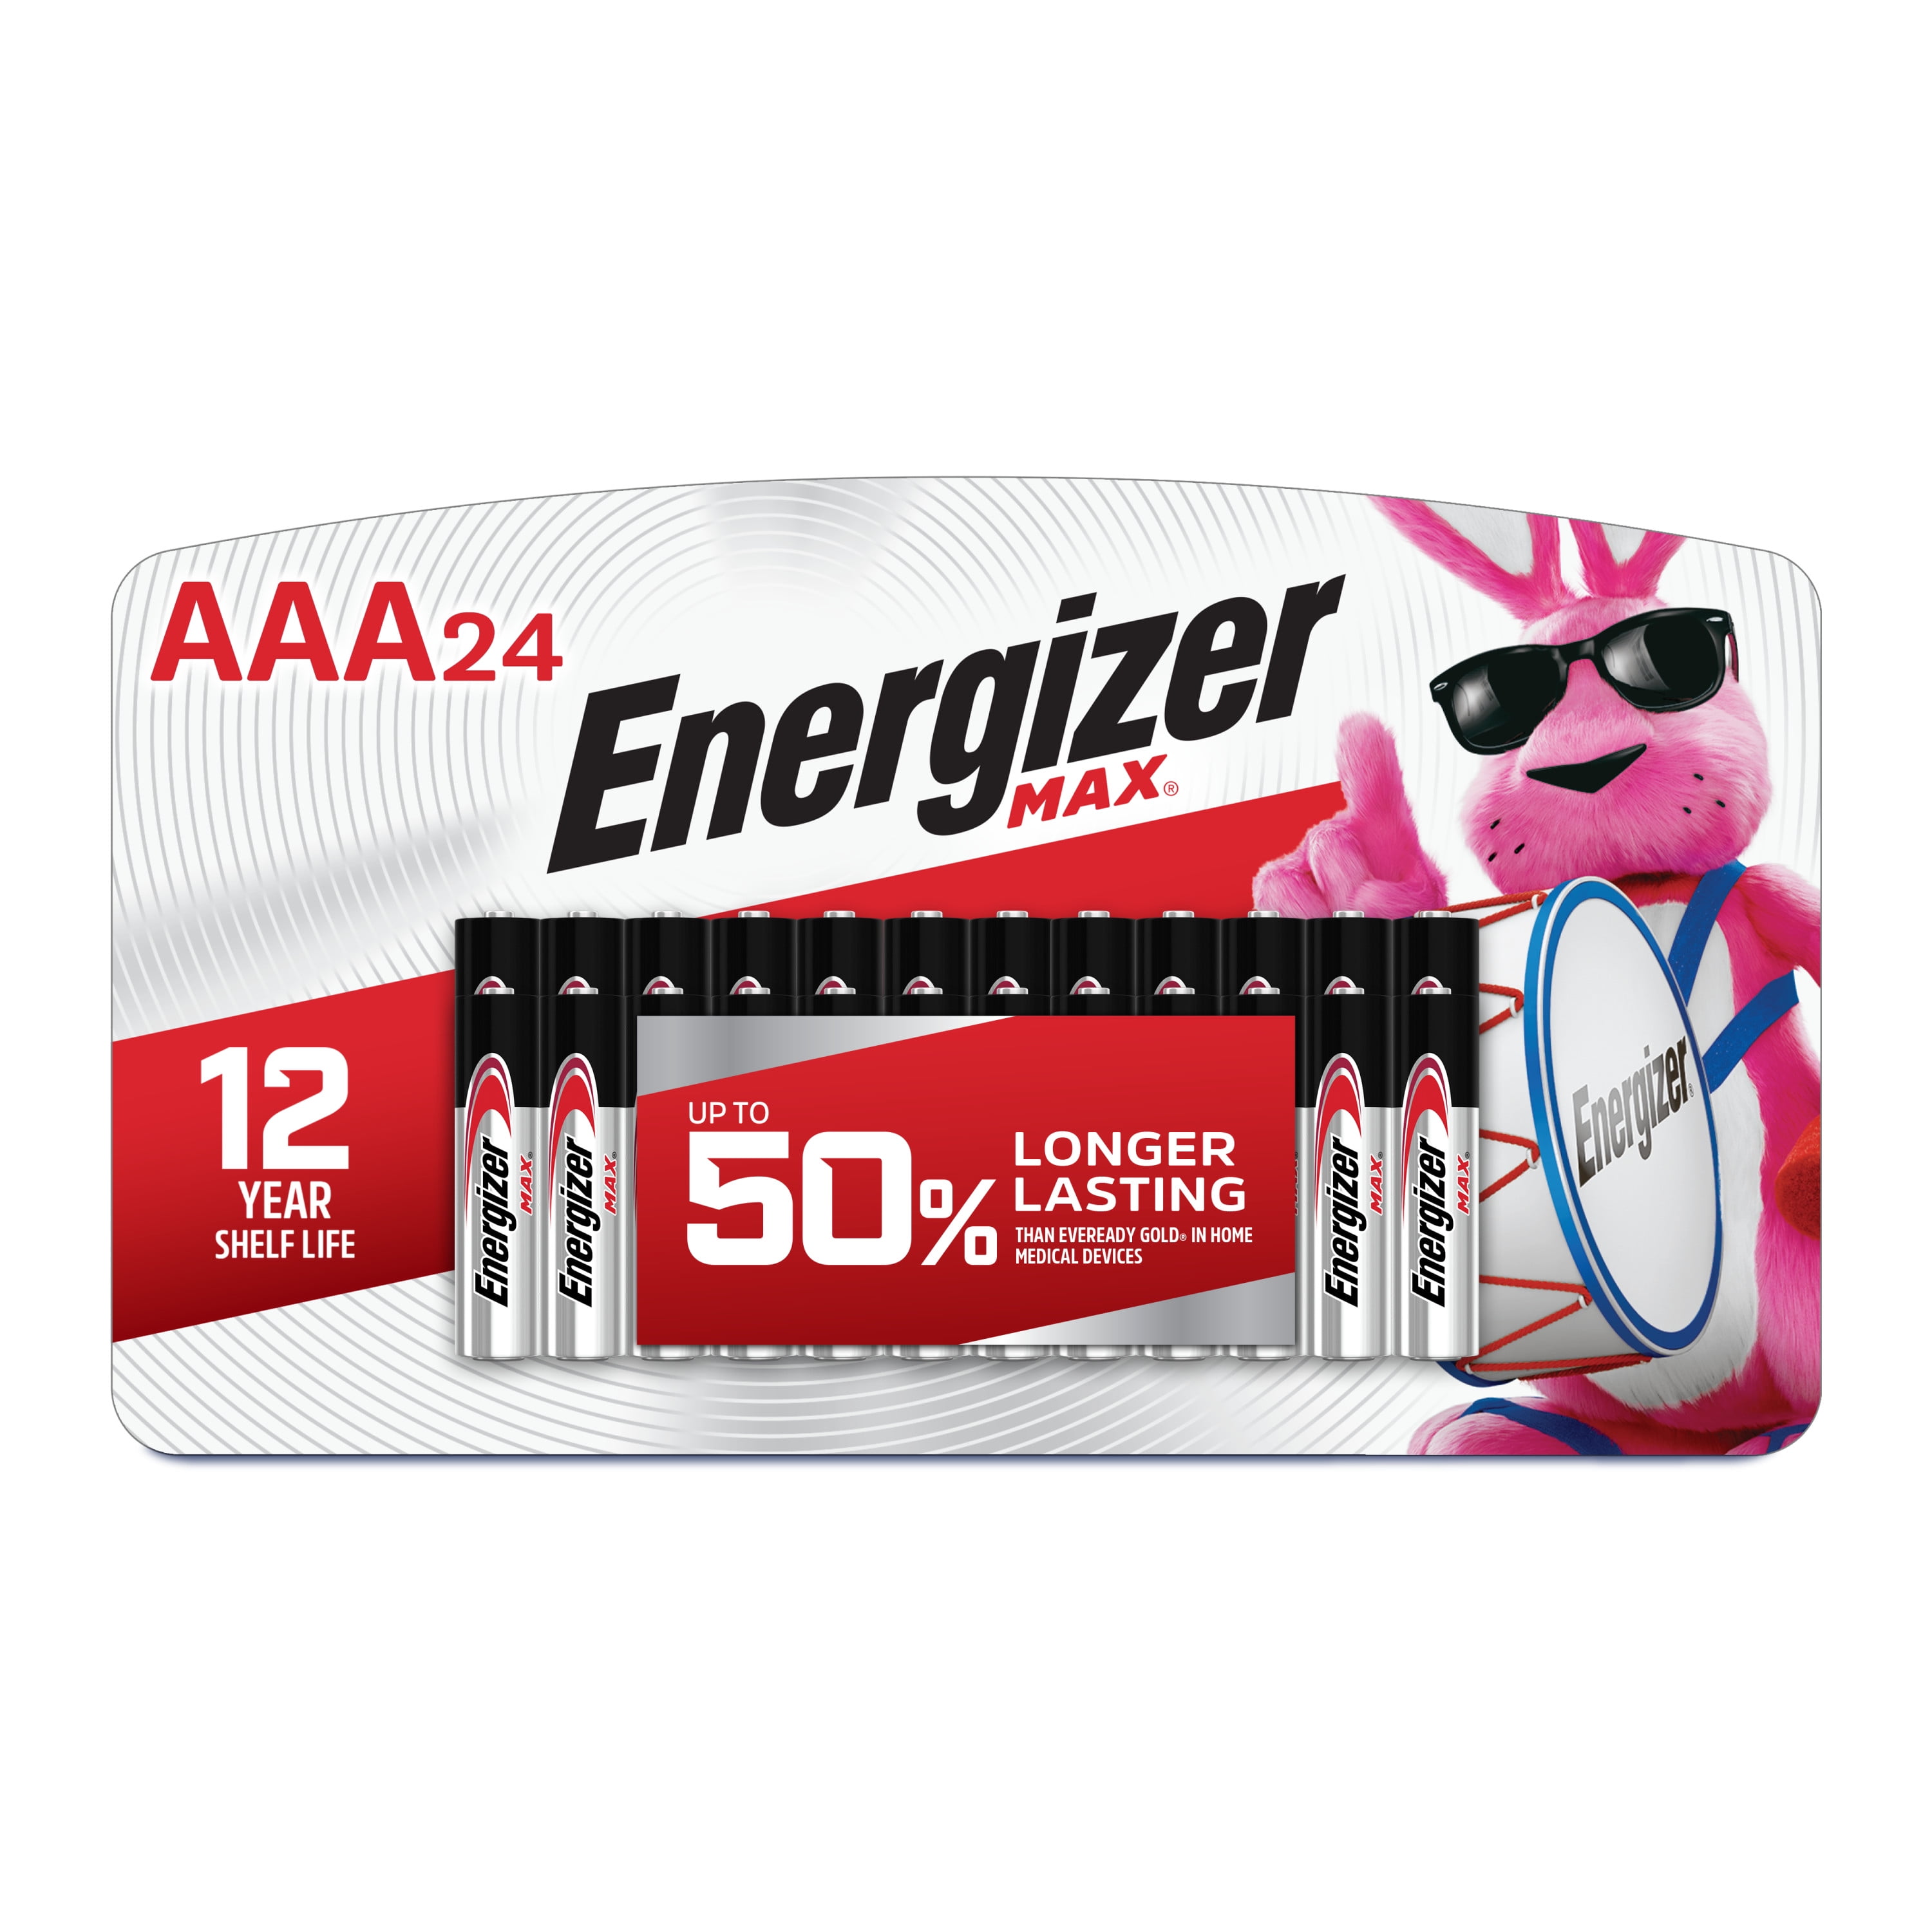 Energizer MAX AAA Batteries (24 Triple Alkaline Batteries Pack), A